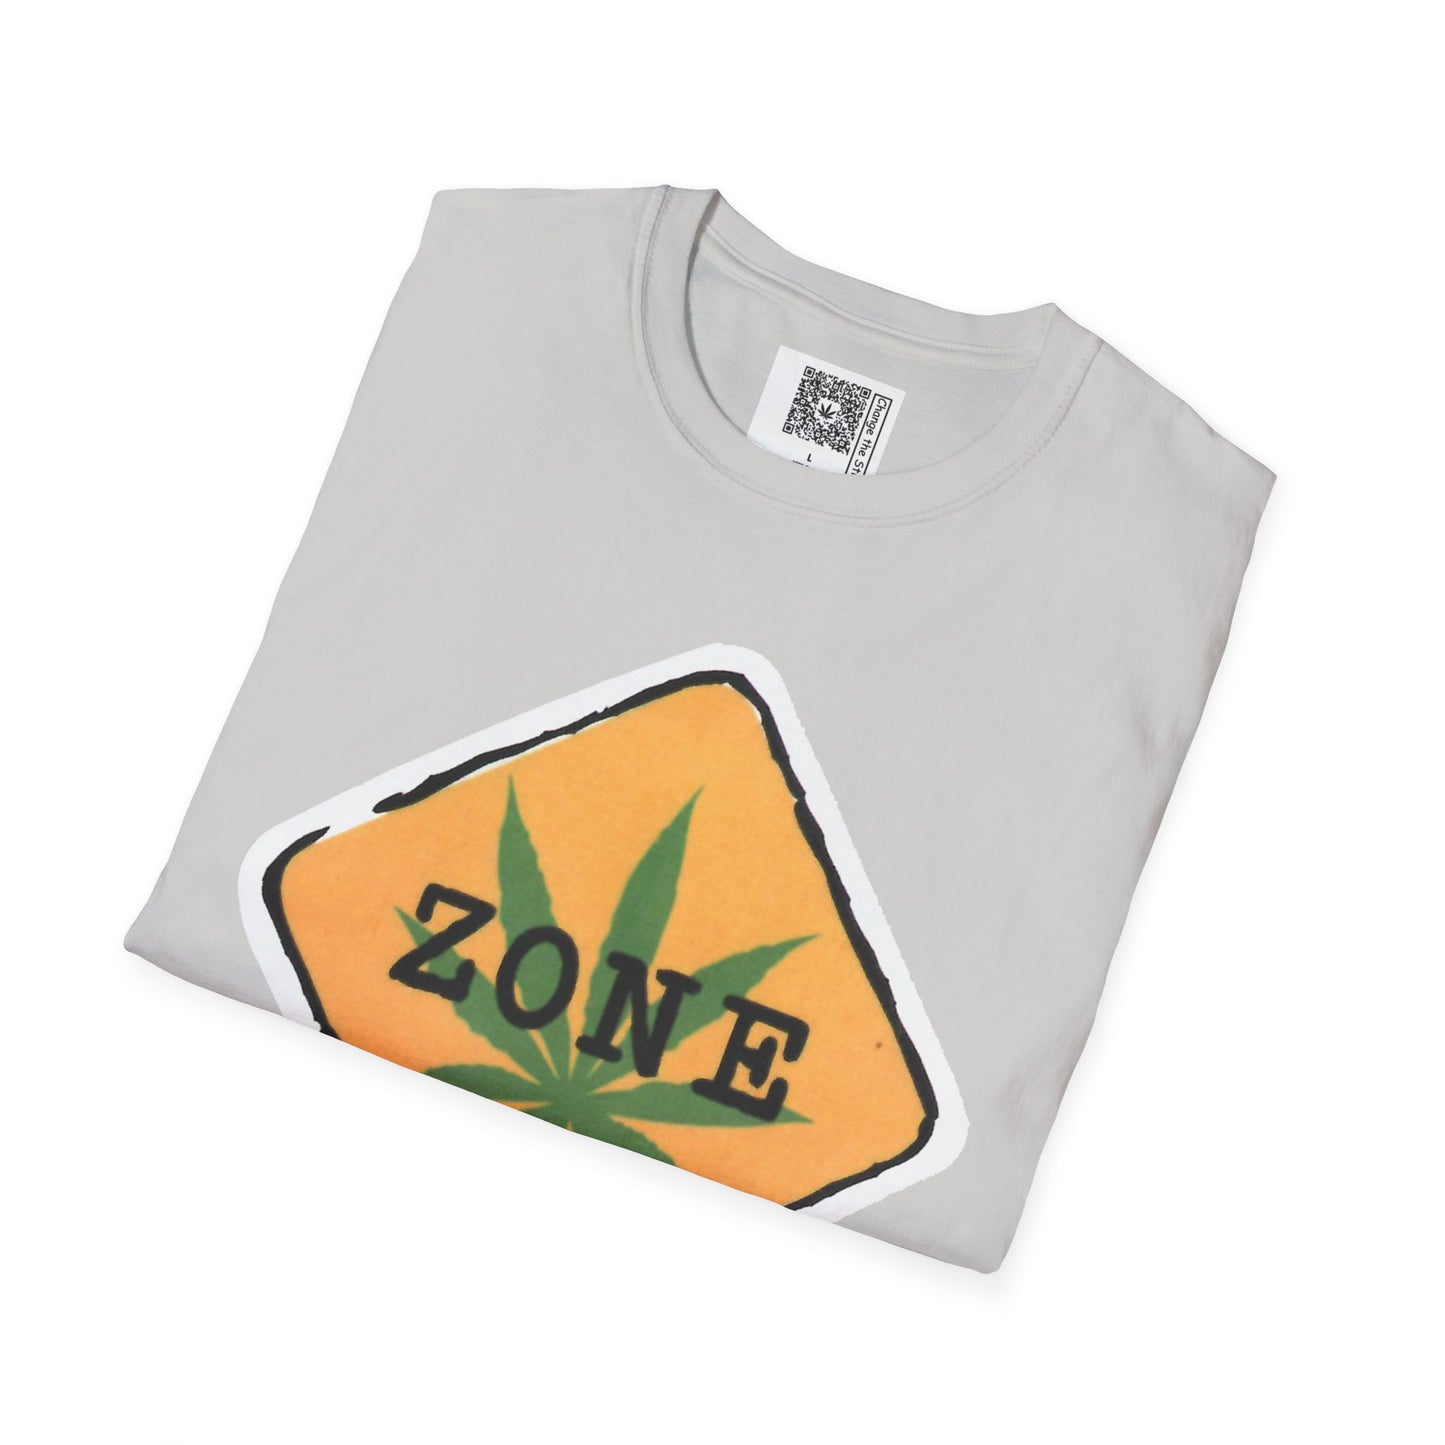 Change the Stigma ZONE Weed Shirt